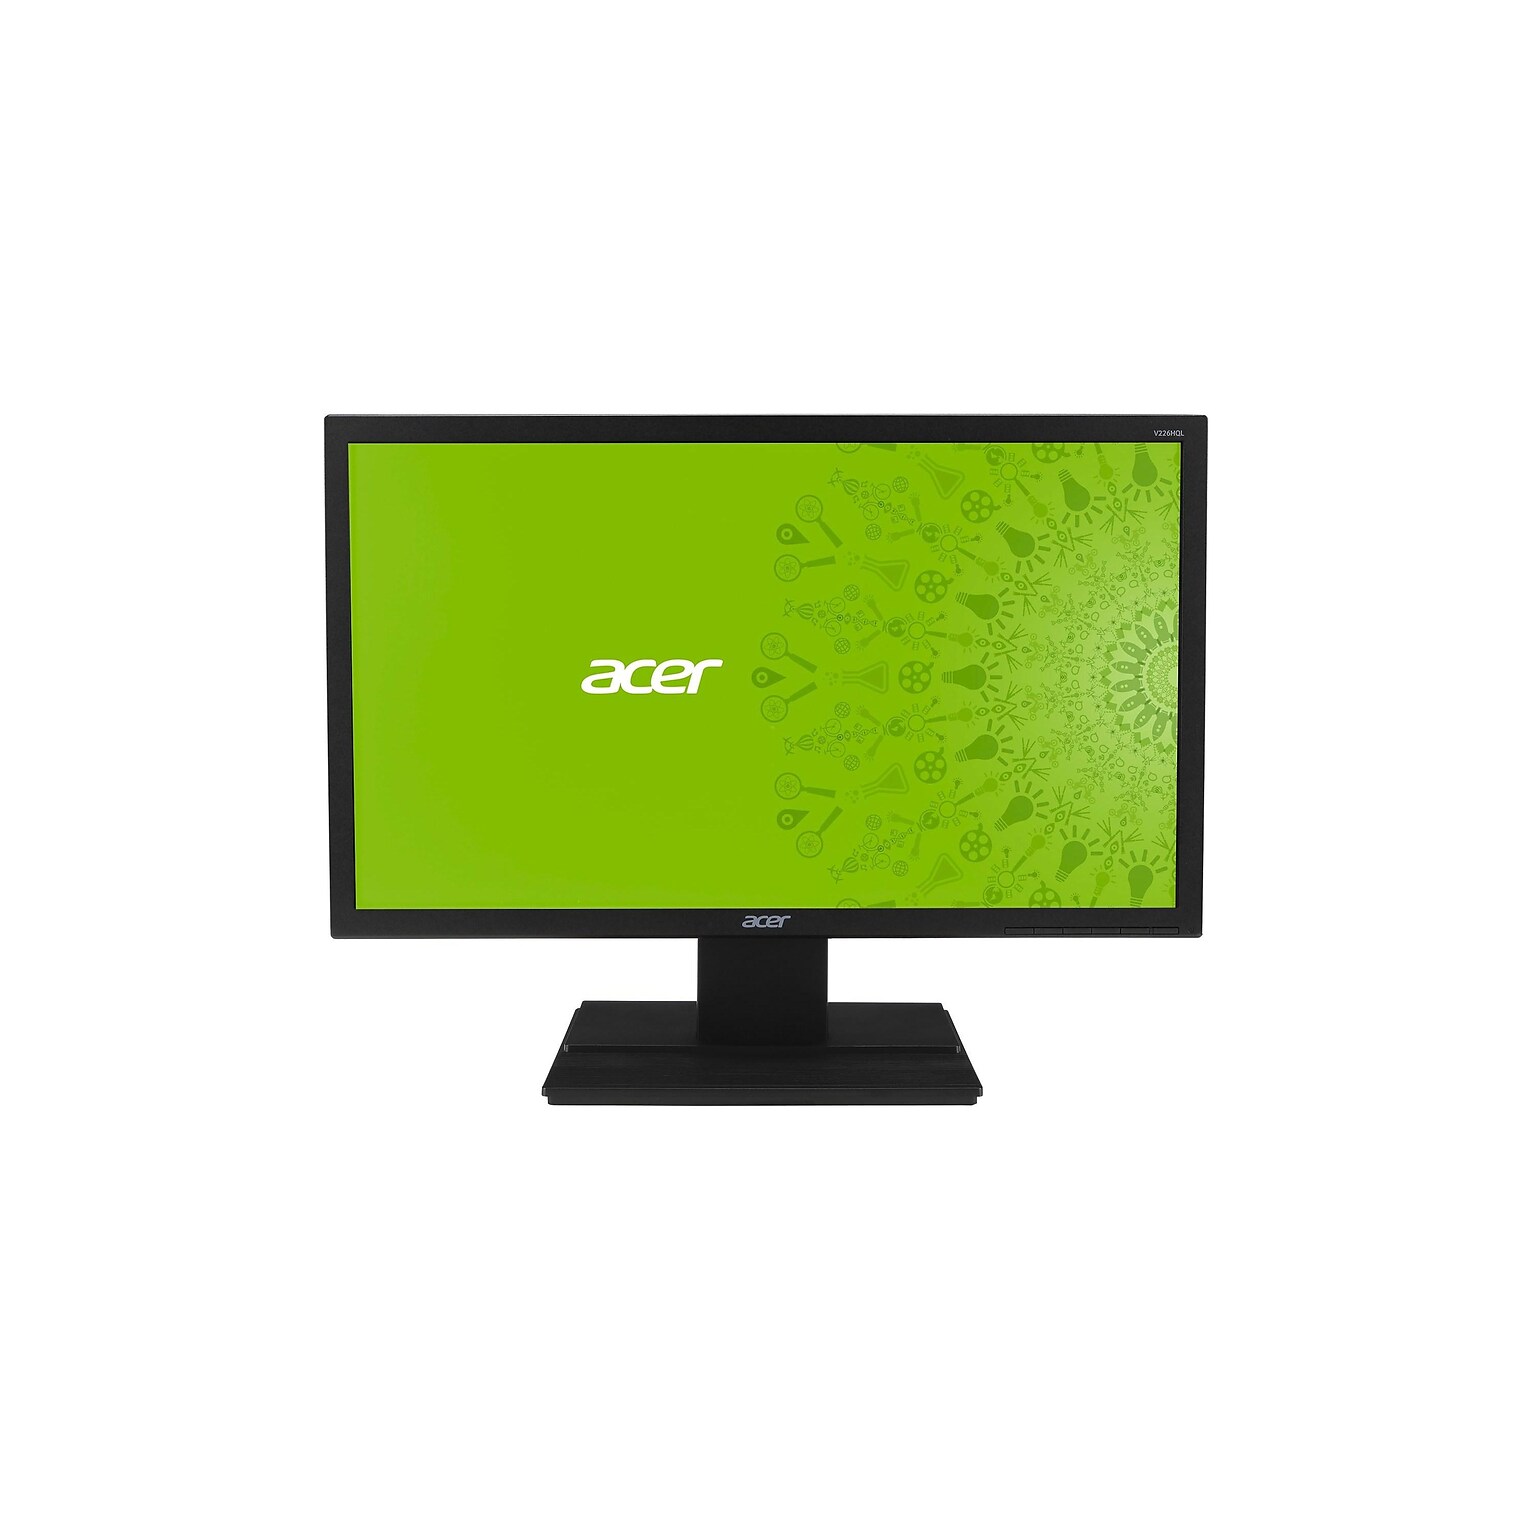 Acer V6 V226HQL Bbd 21.5 LED Monitor, Black